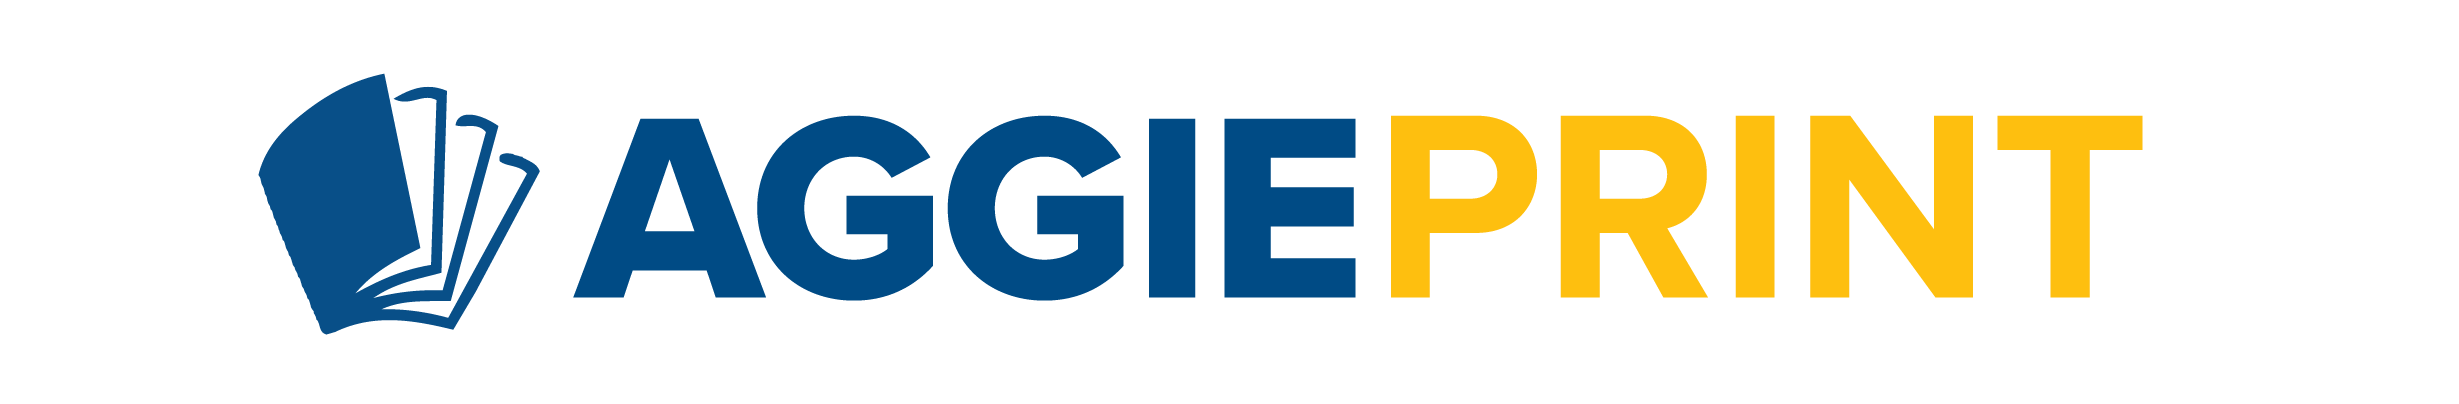 aggie print logo